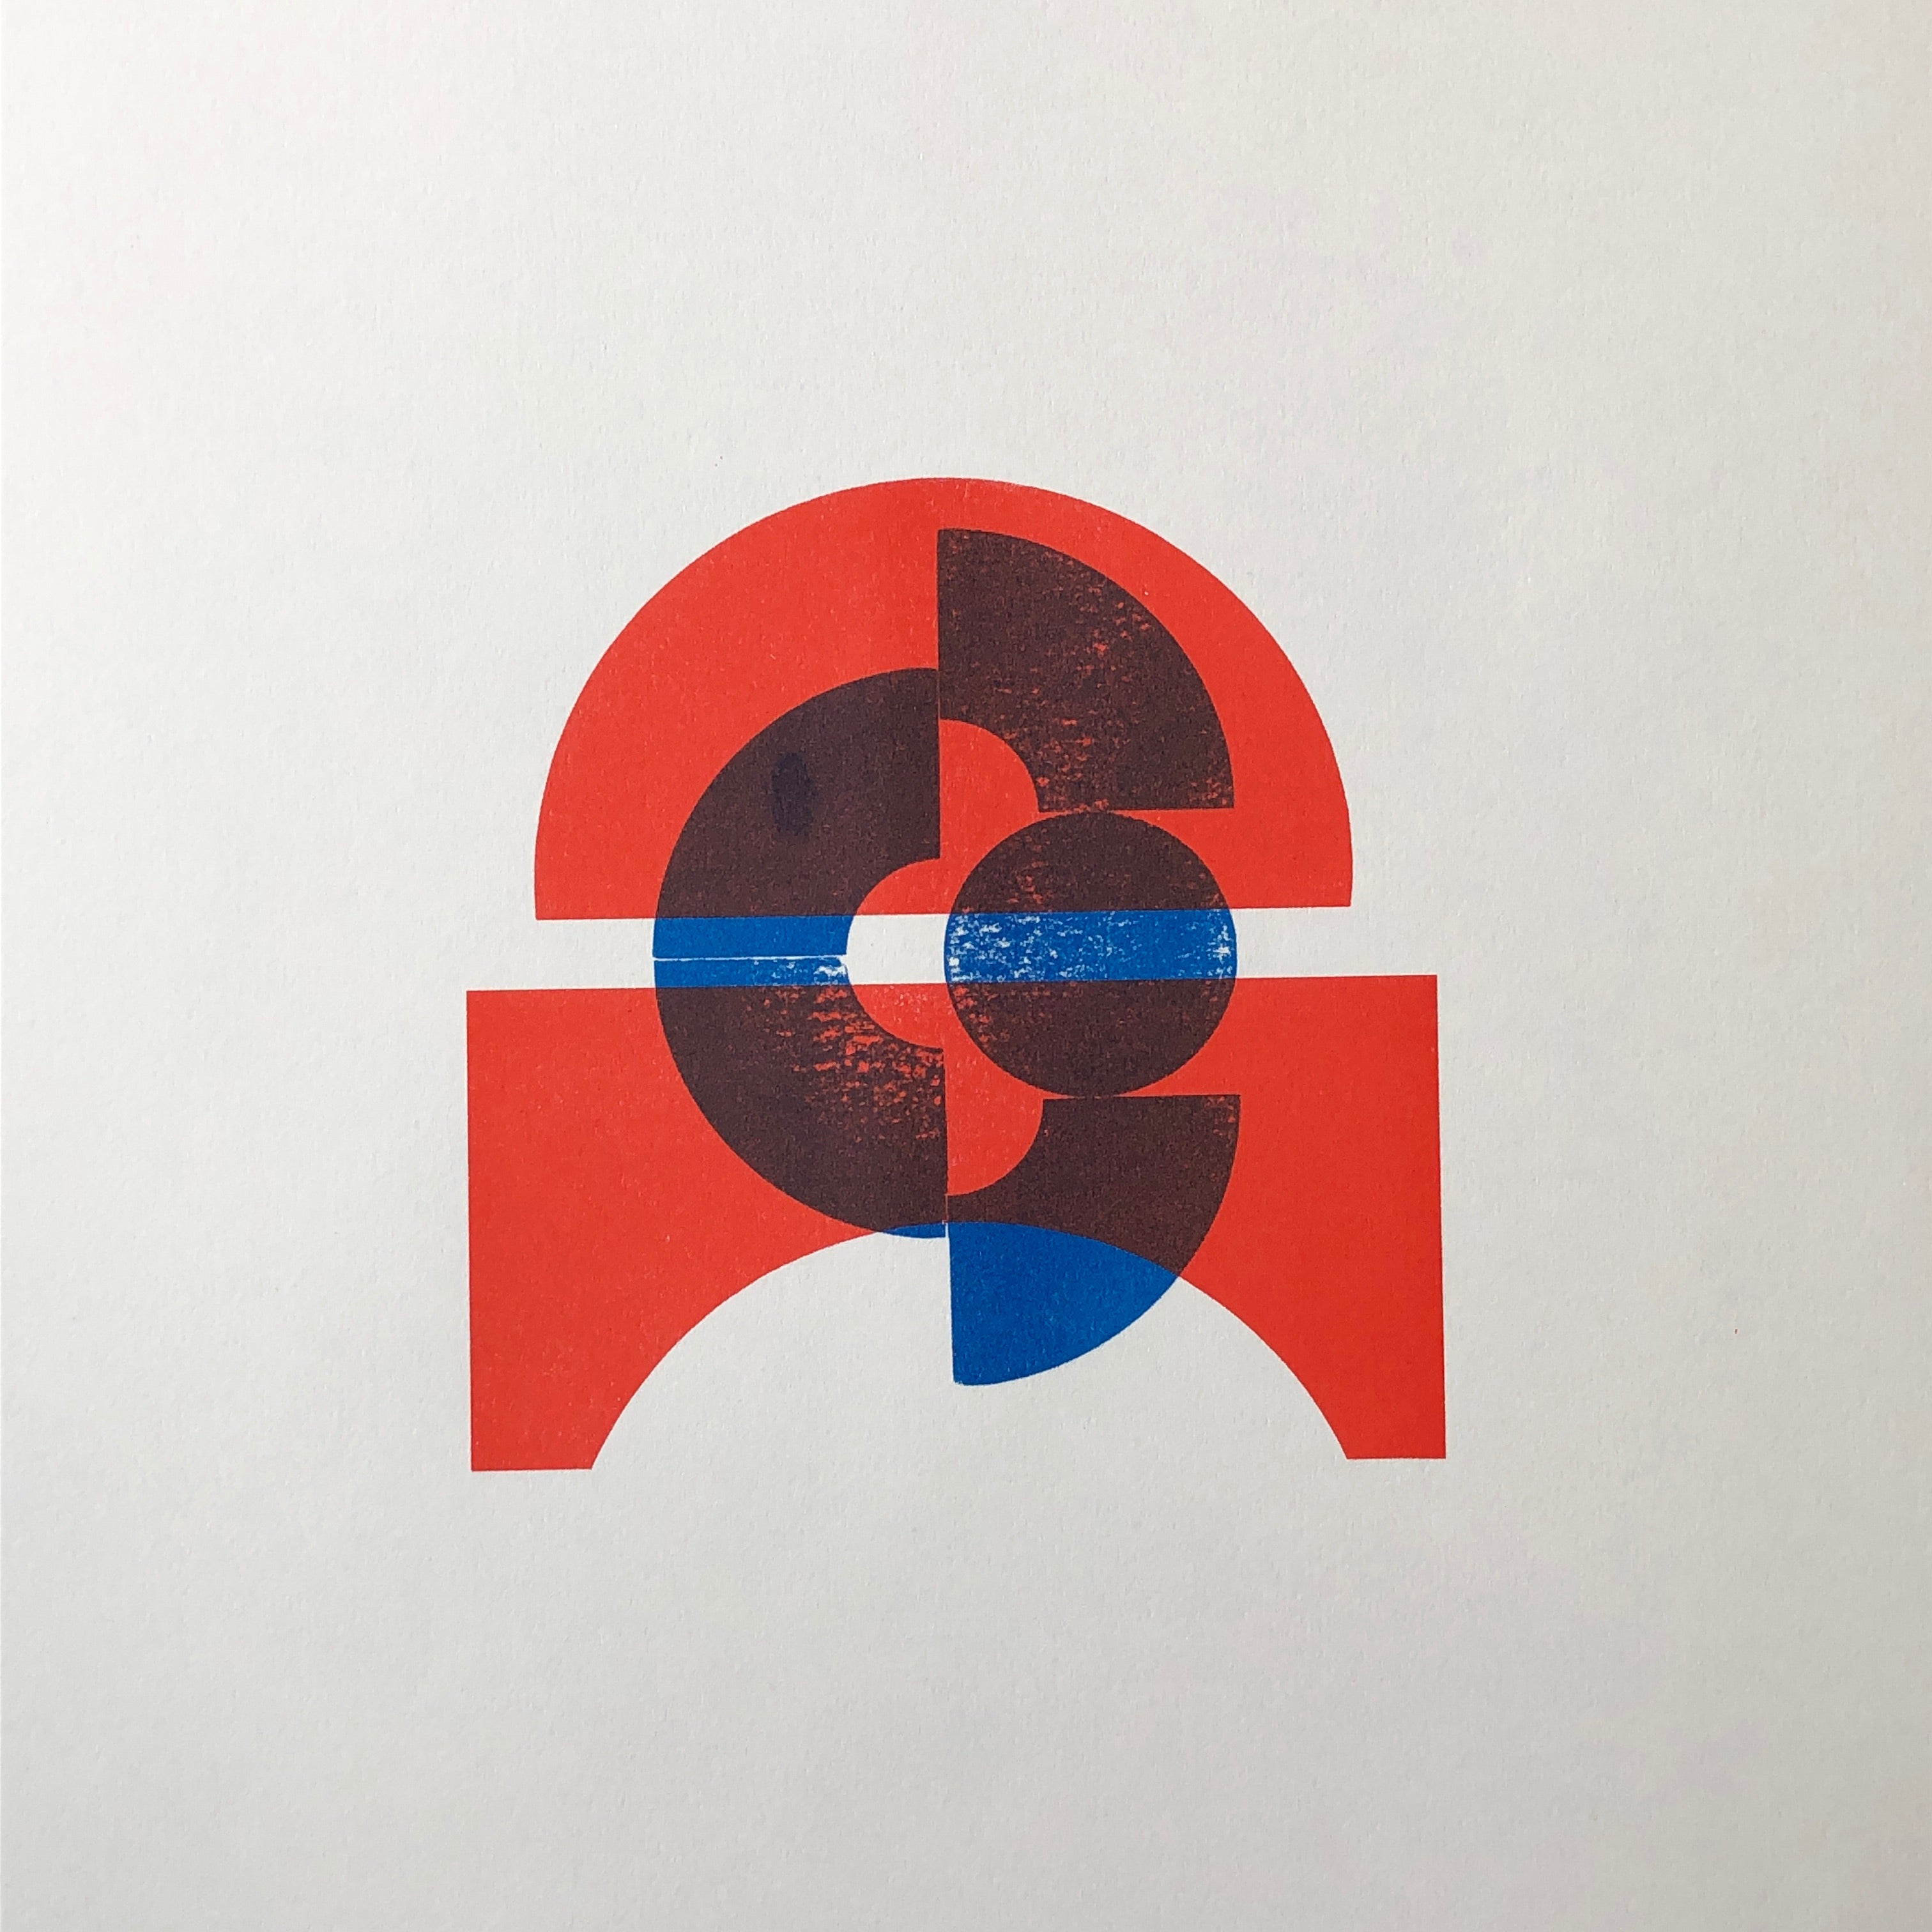 RED & BLUE PRINTED BLOCK “BUTTON” A3 Risograph Print – 001